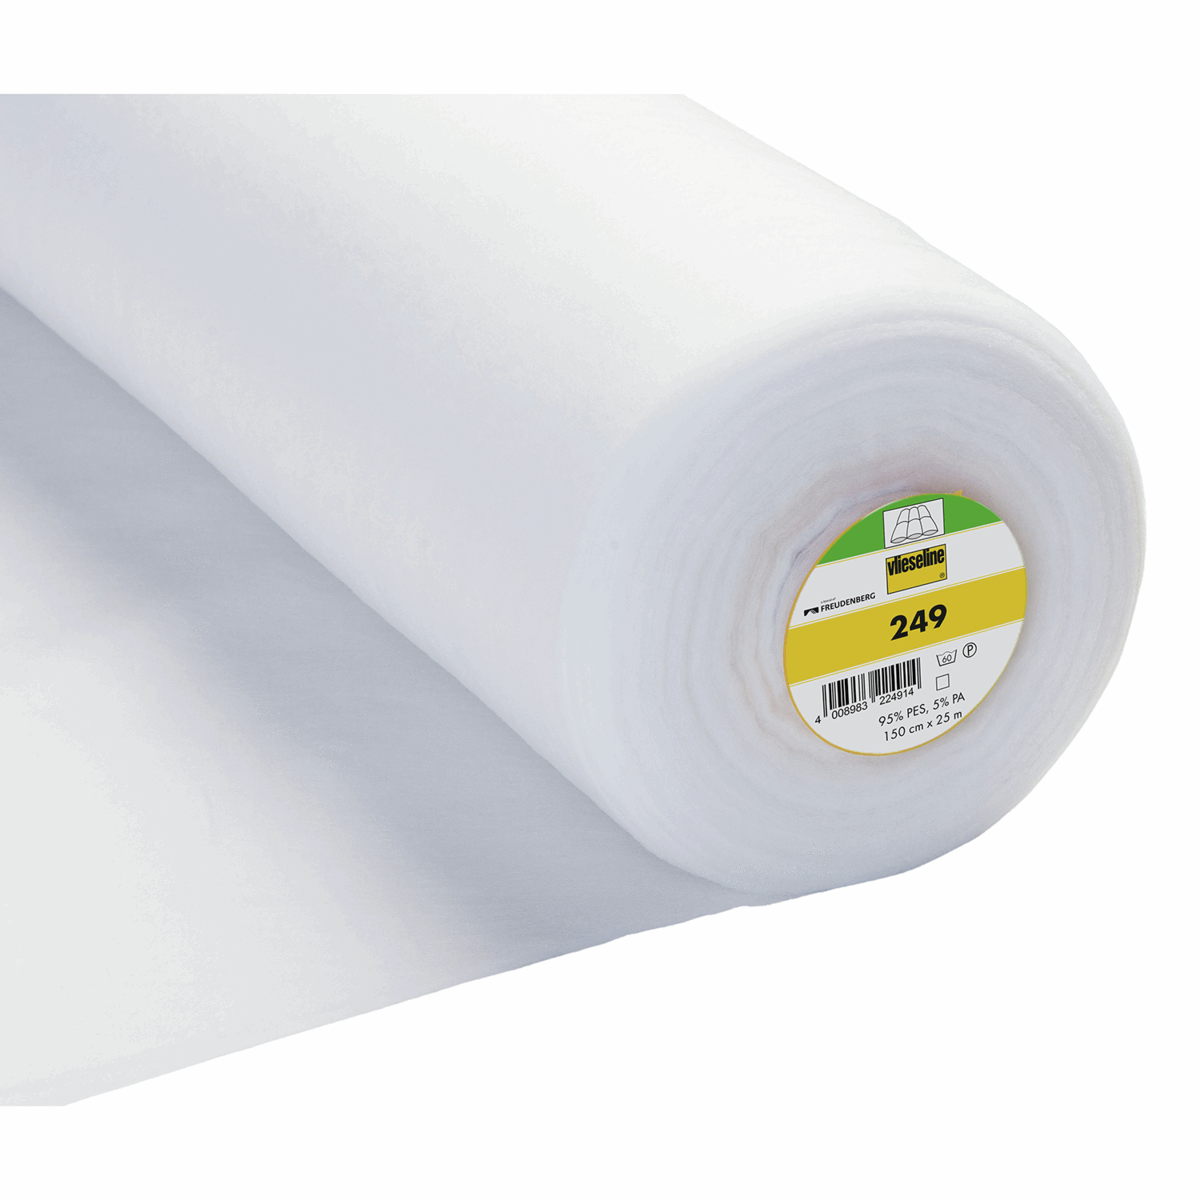 Vlieseline White Low Loft Volume Fleece - 25m x 150cm